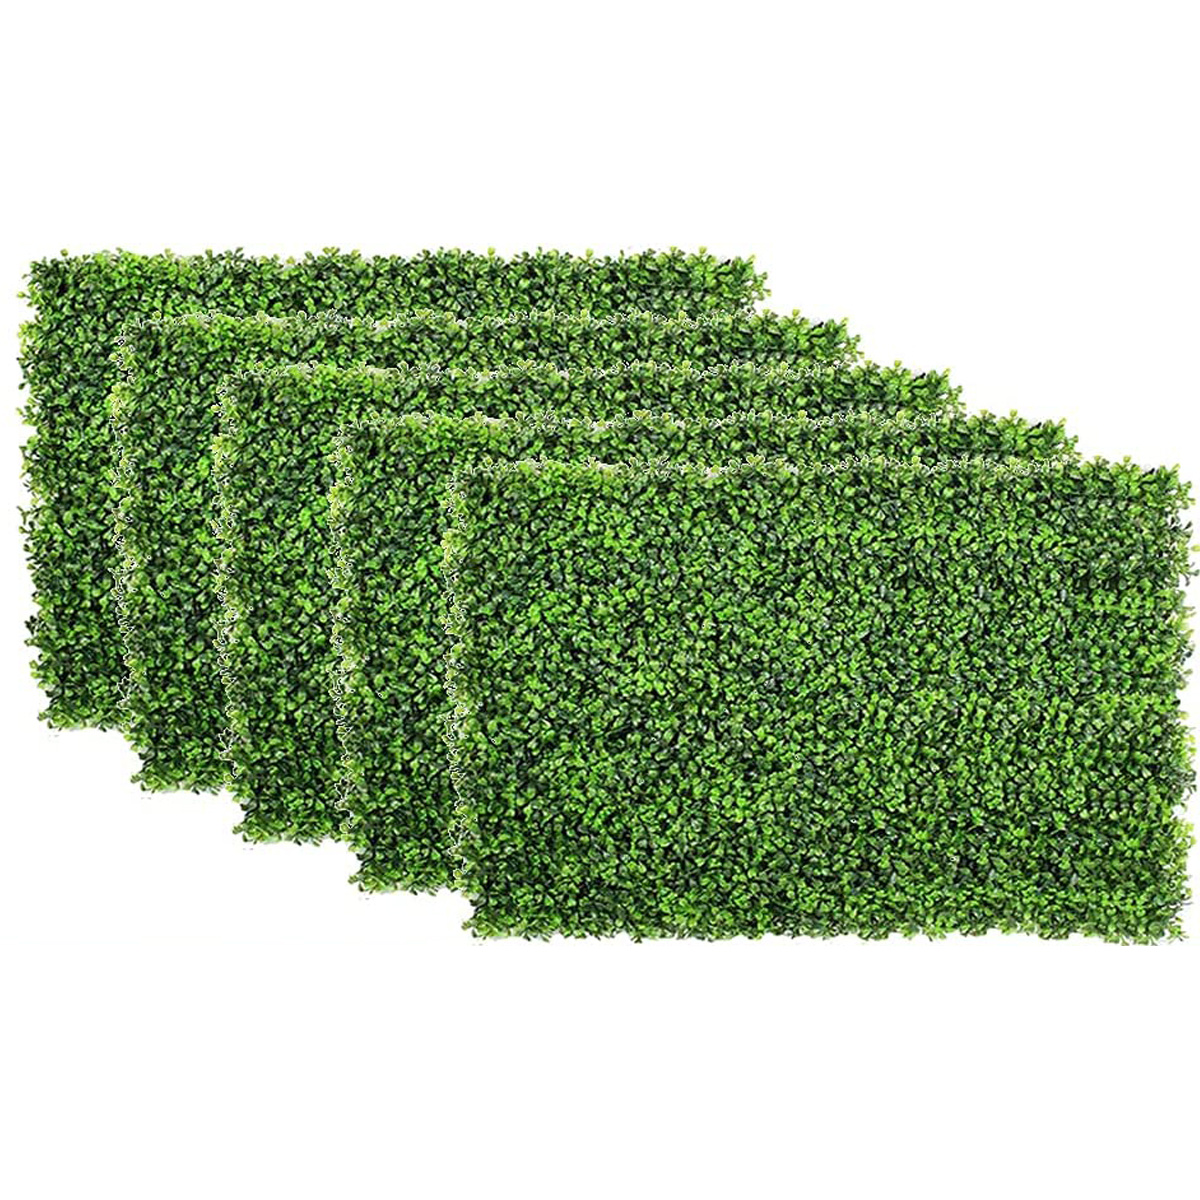 Artificial Plant Fake Plant Wall Lawn, Plastic Lawn, Decorative Home Plant  Wall, 40CM 60CM width Length 